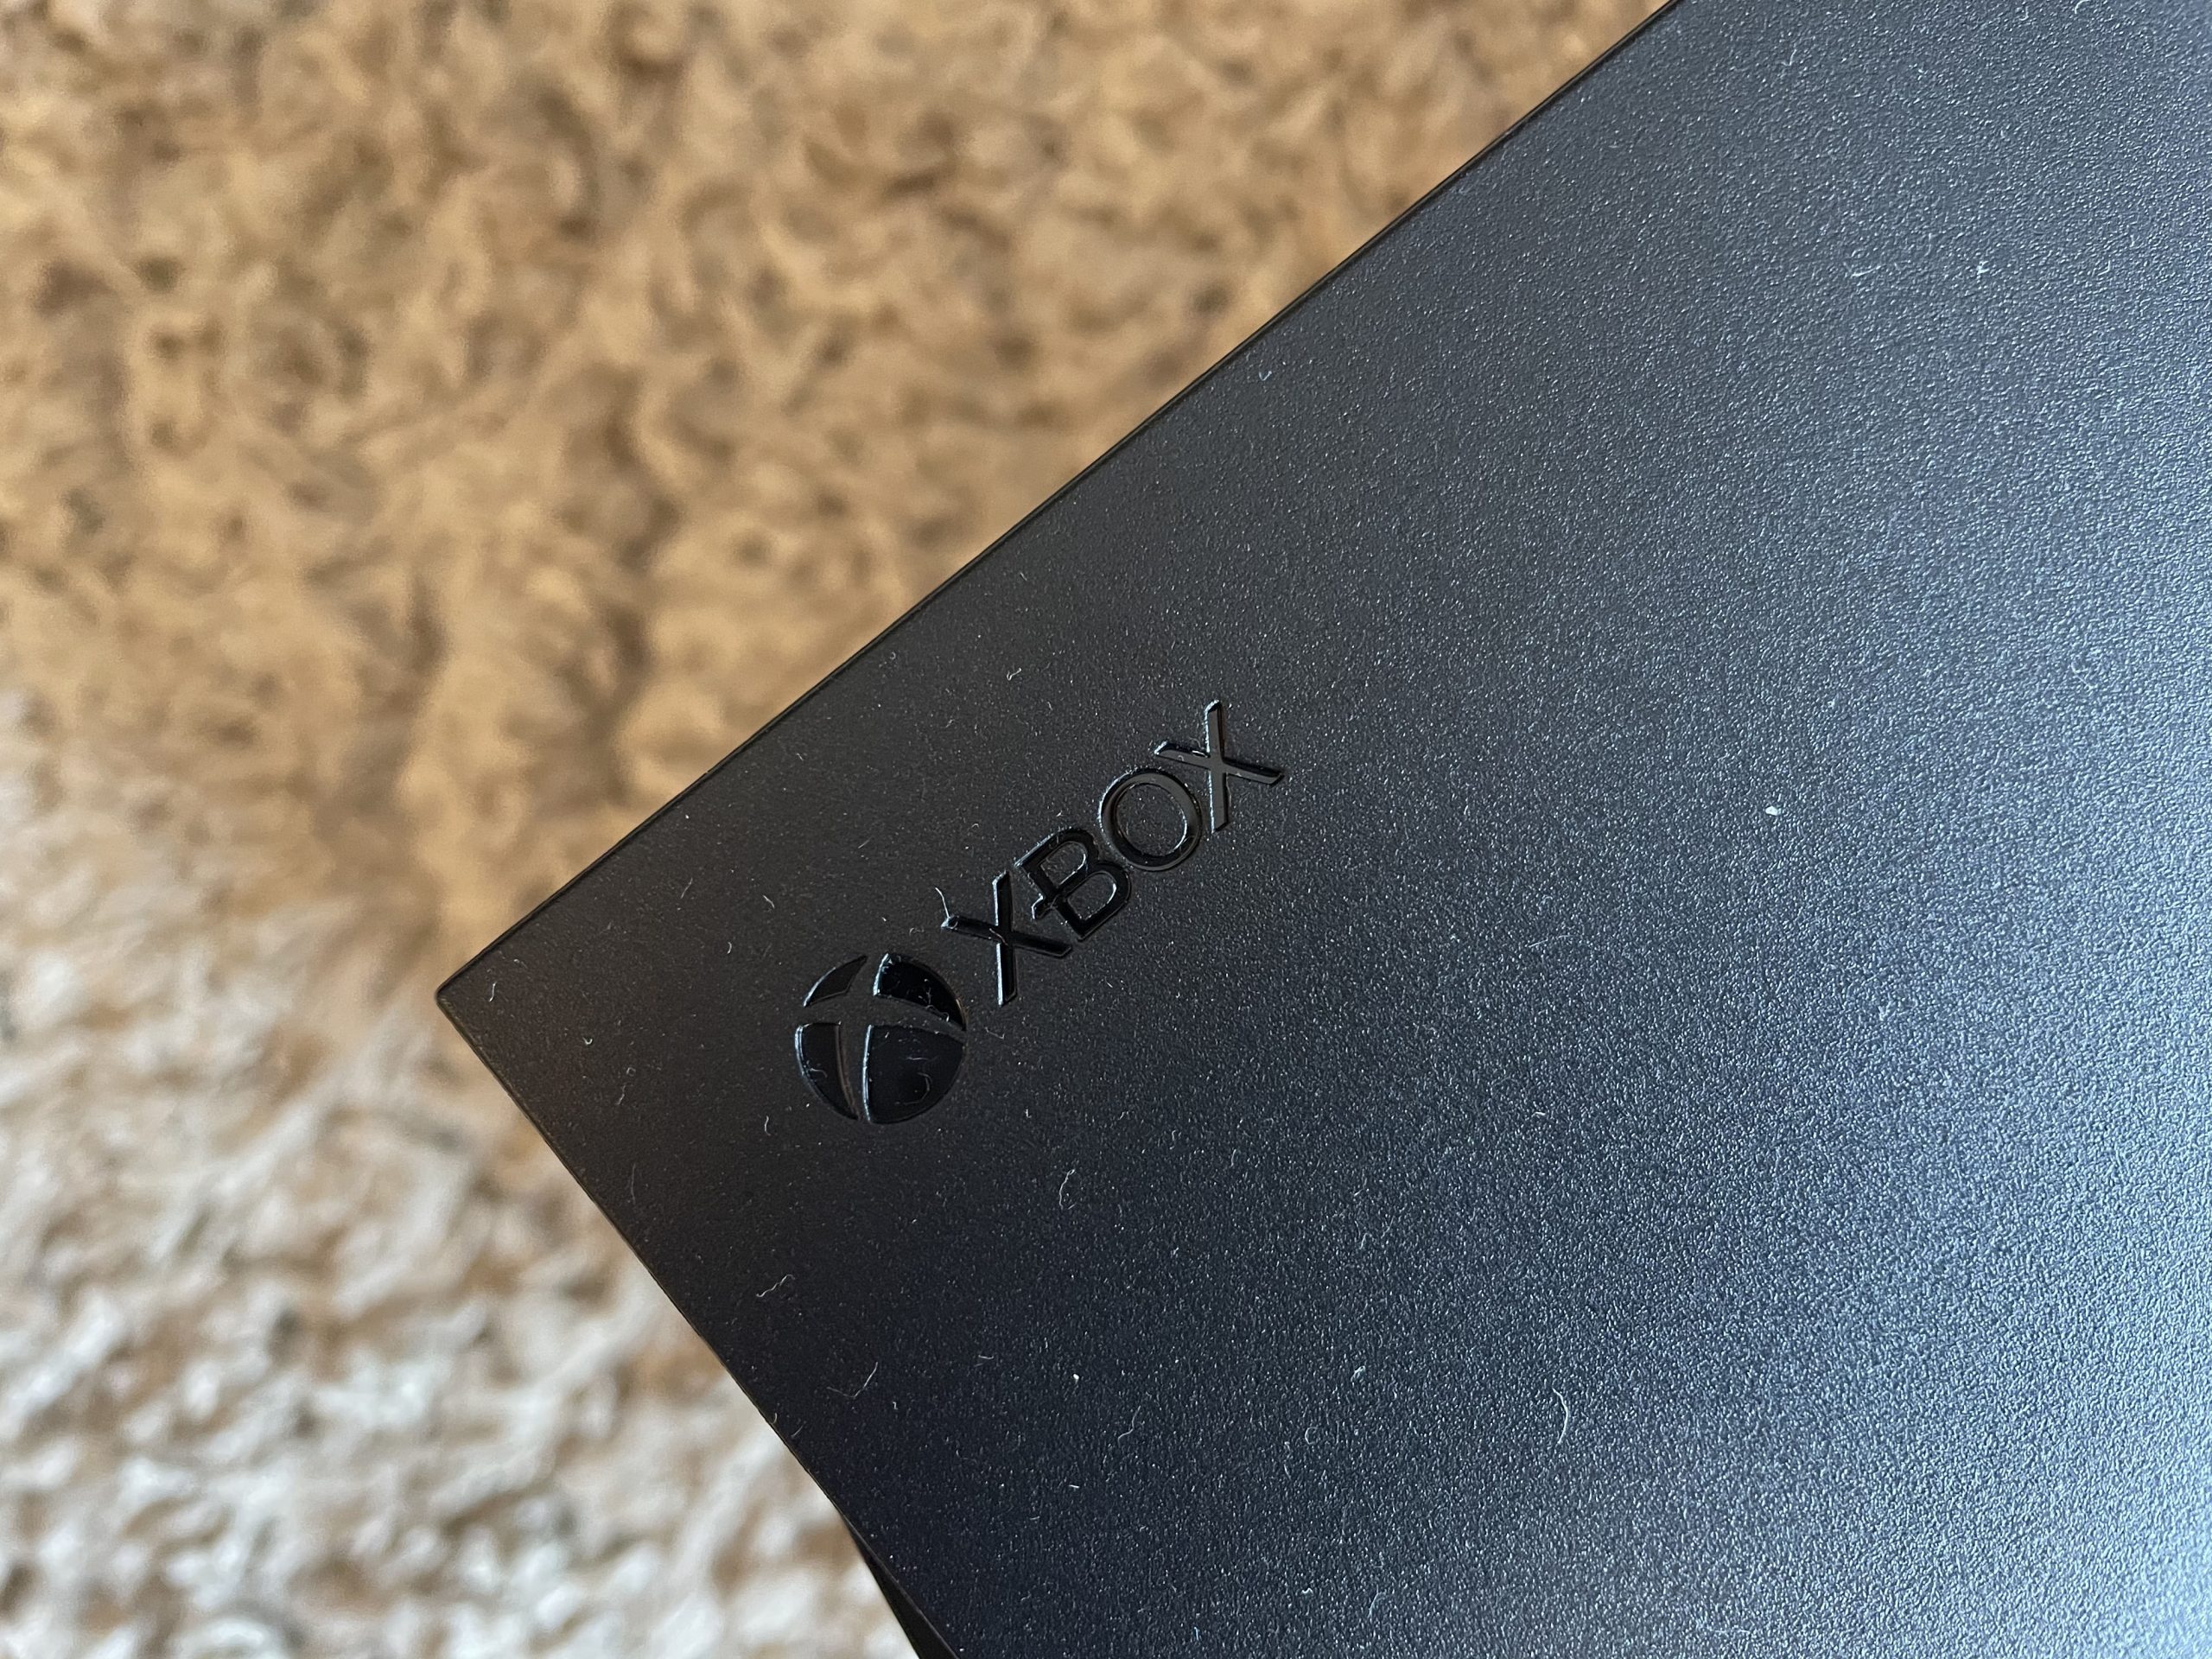 Xbox Series X review: it's brilliant, but where's all the fun new stuff?